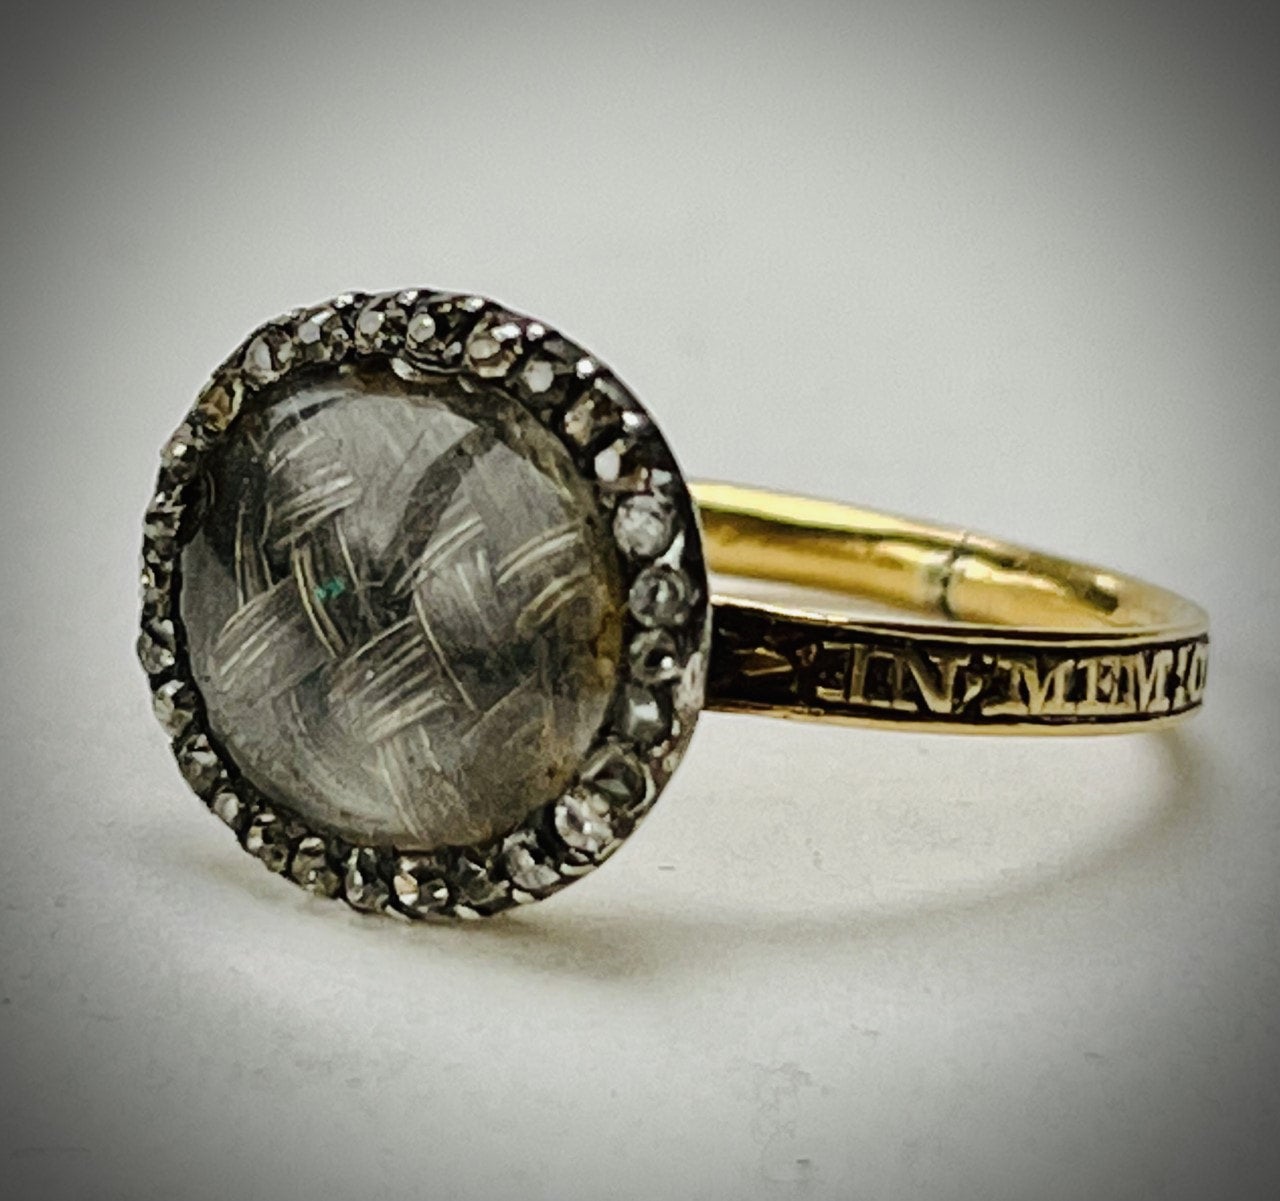 Elegant 2-Carat Antique Diamond Ring – A Georgian Era Masterpiece